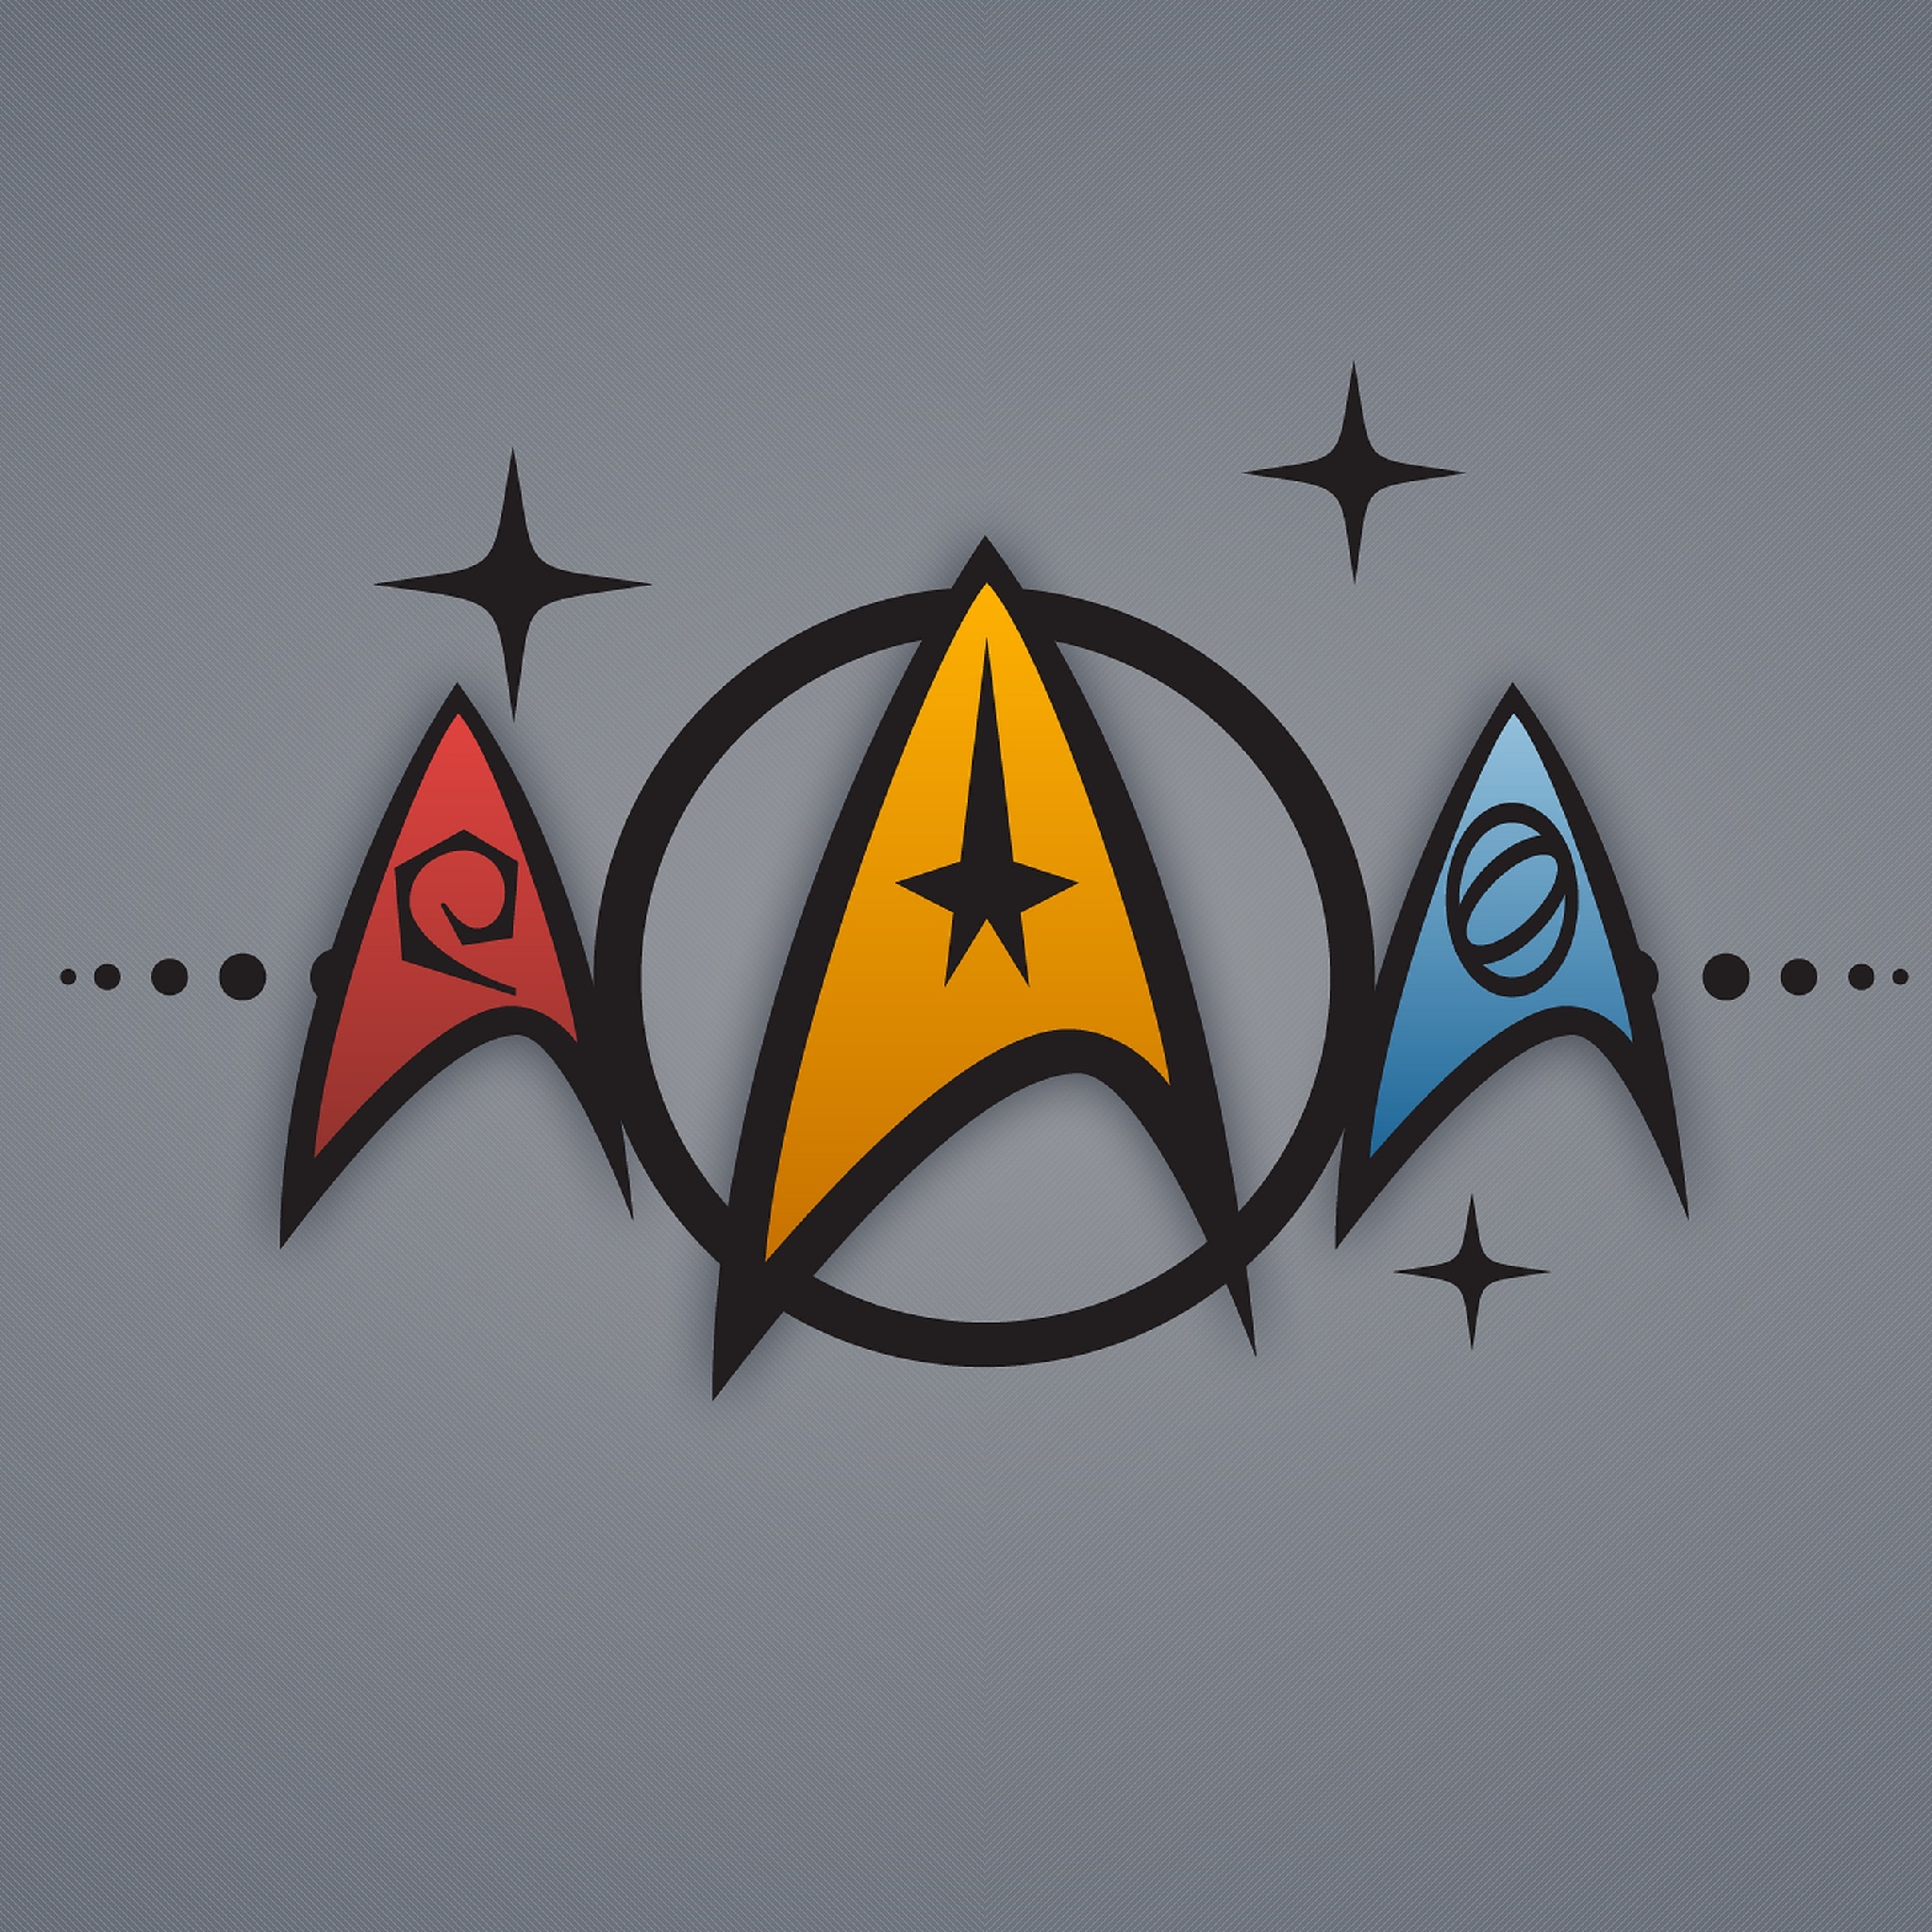 Download Star Trek Logo 2048 x 2048 Wallpapers - 4570474 - science